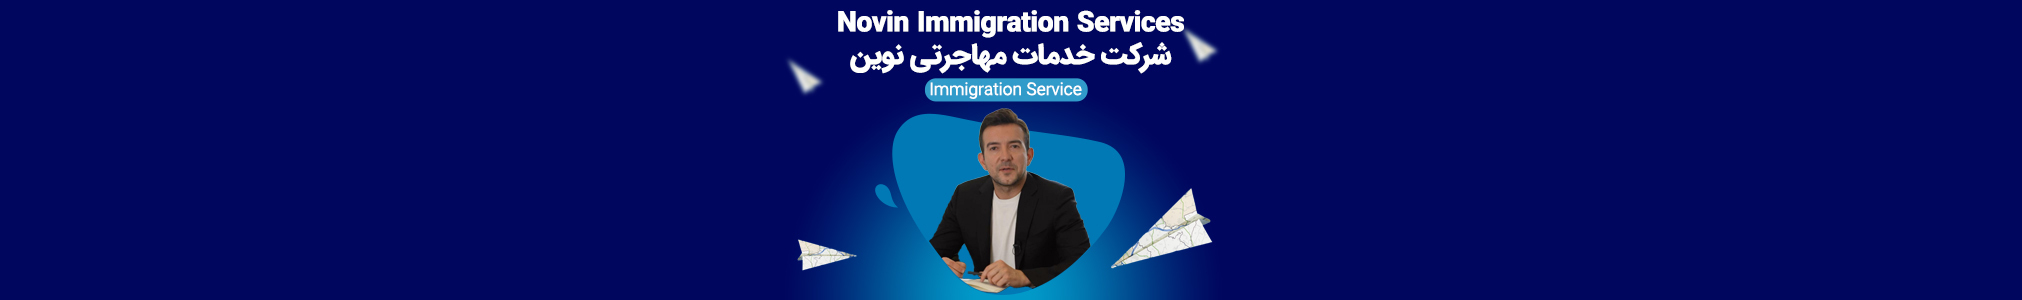 Novin Immigration Services